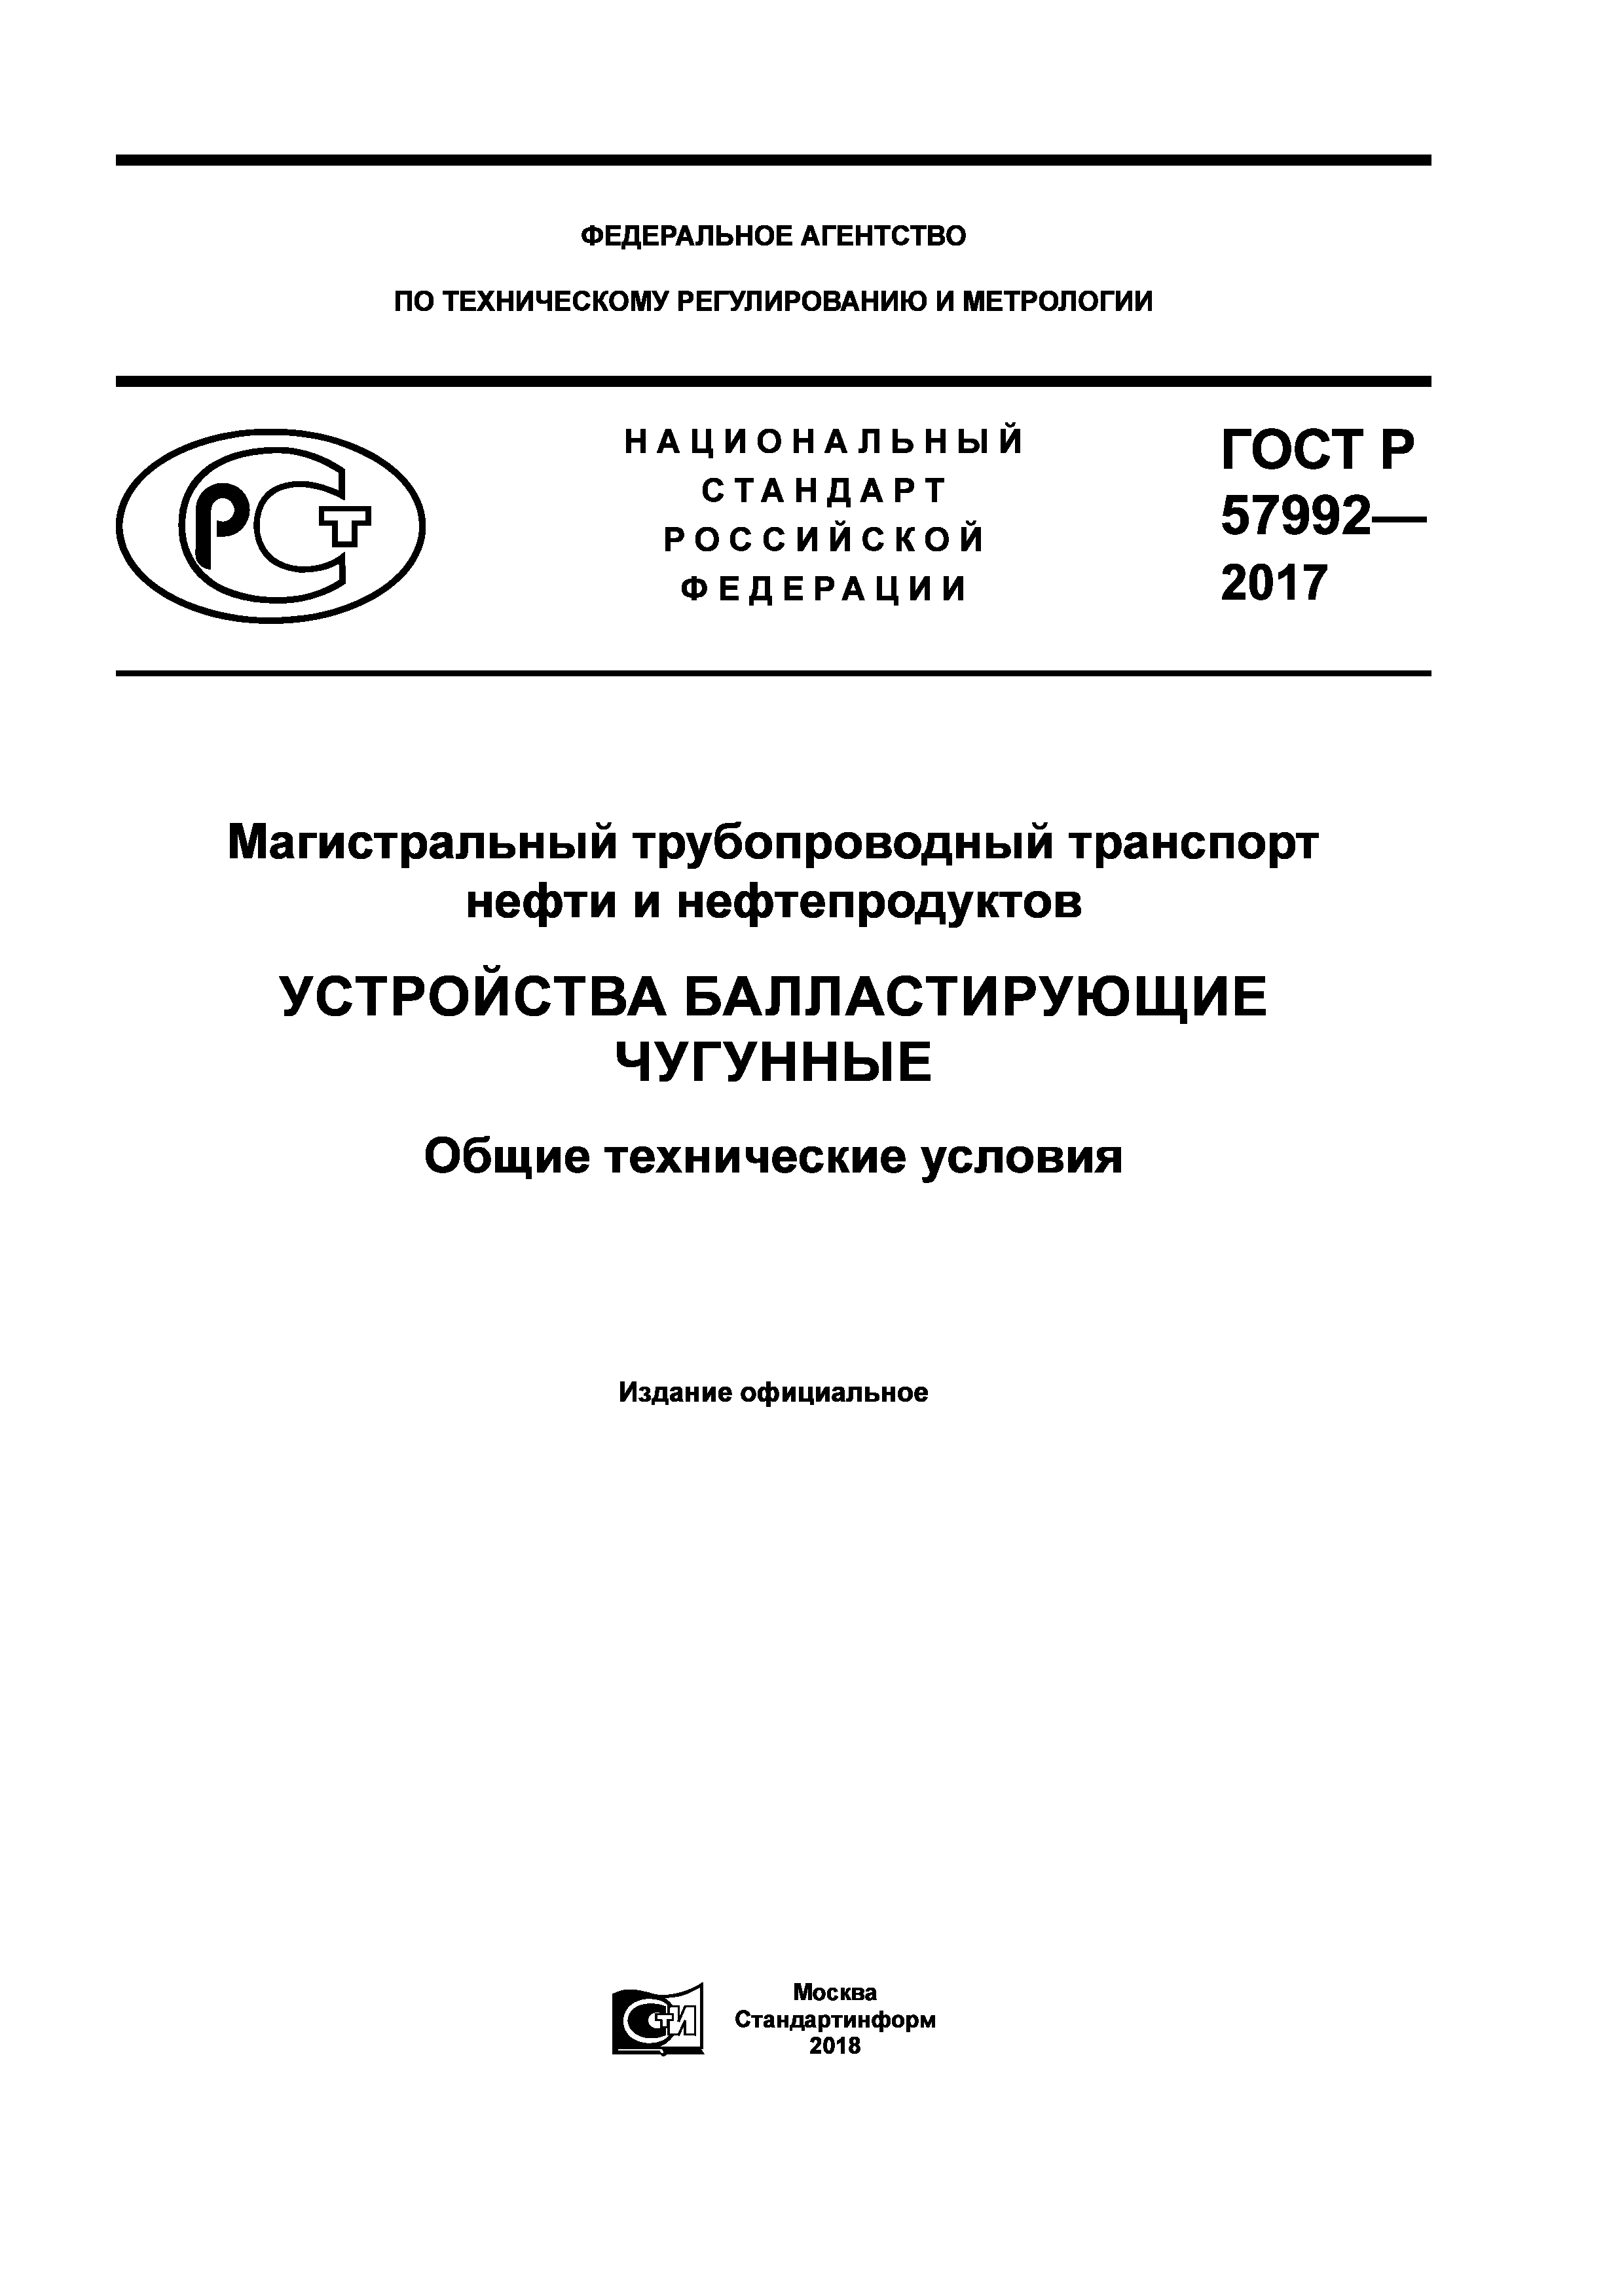 ГОСТ Р 57992-2017